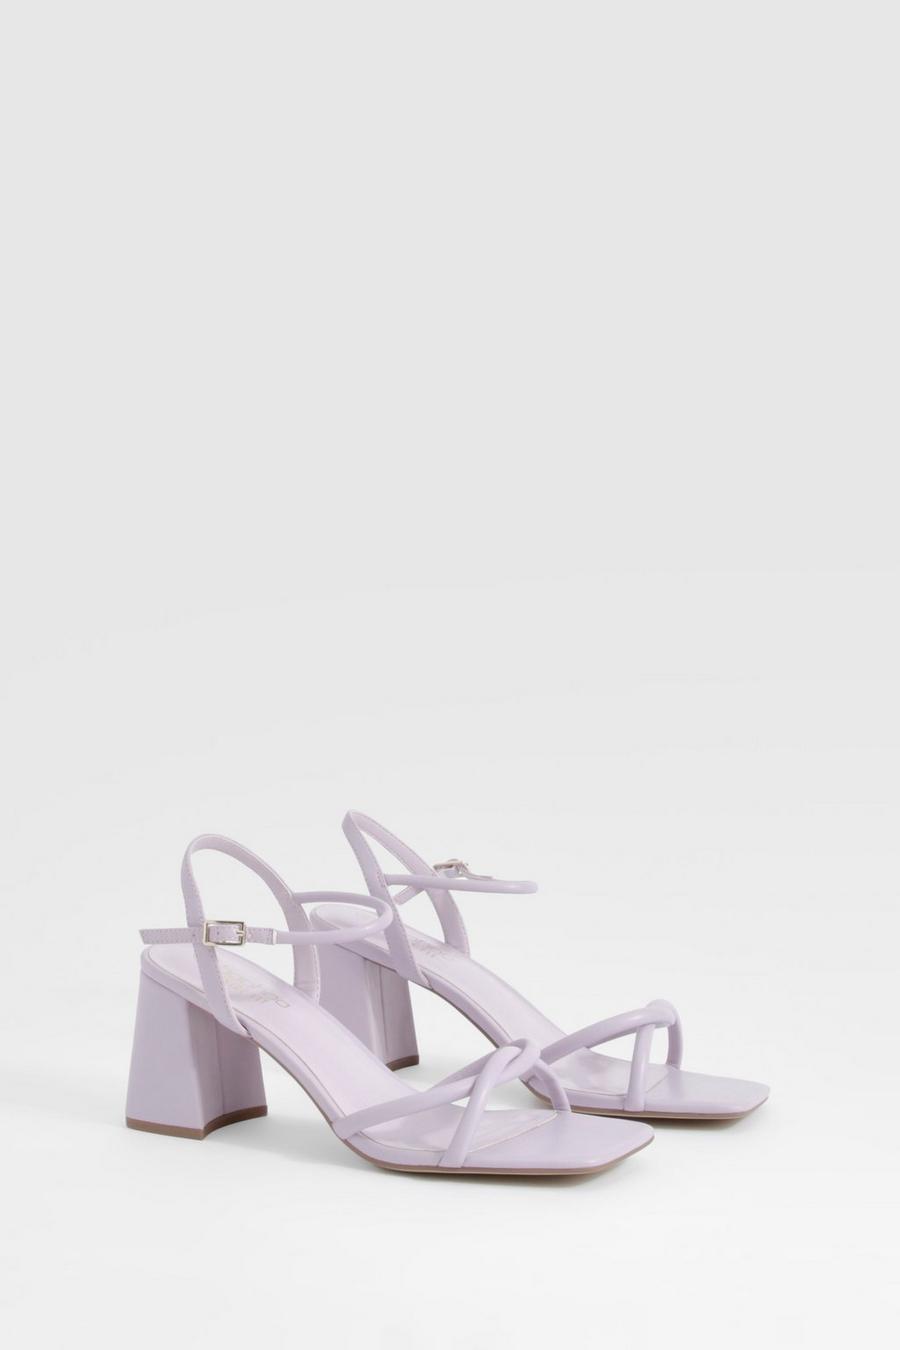 Lilac Asics Gel Kayano 5 360 'White' White White Marathon Running Shoes Sneakers 1021A161-100